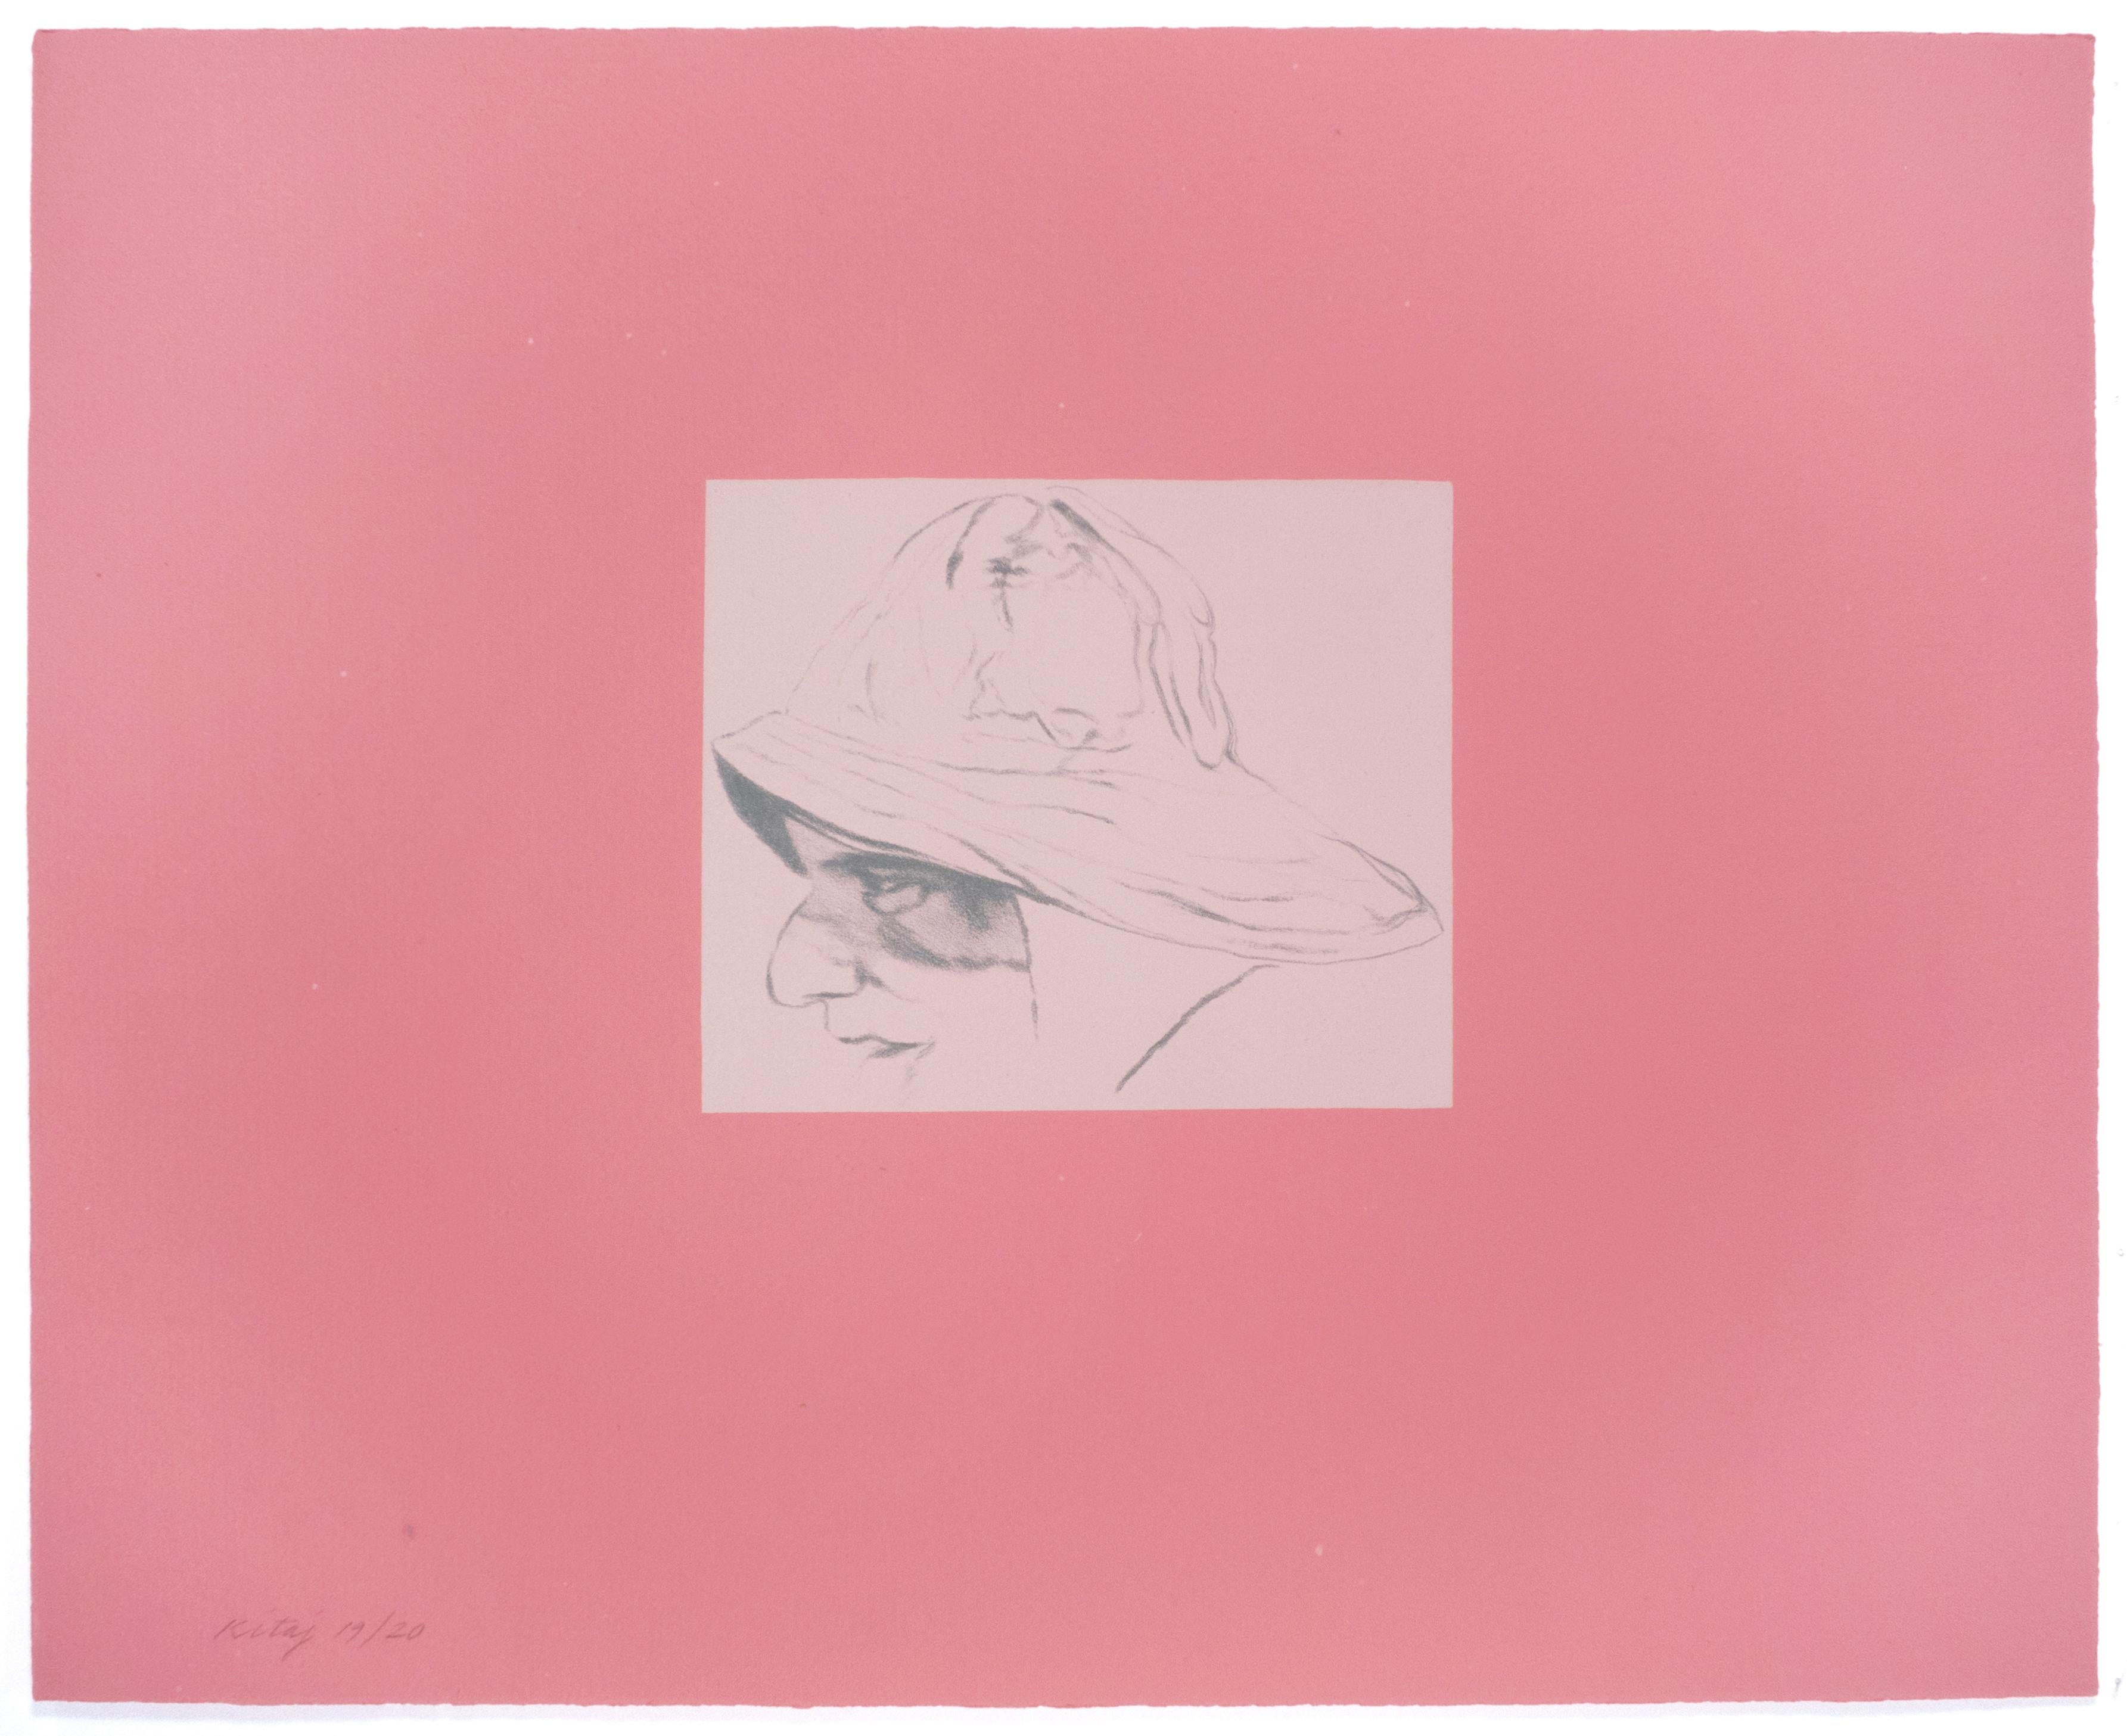 A.B. Bricher Le portrait de marin rose pâle et framboise de Dick (B) R.B. Kitaj - Kitaj en vente 1